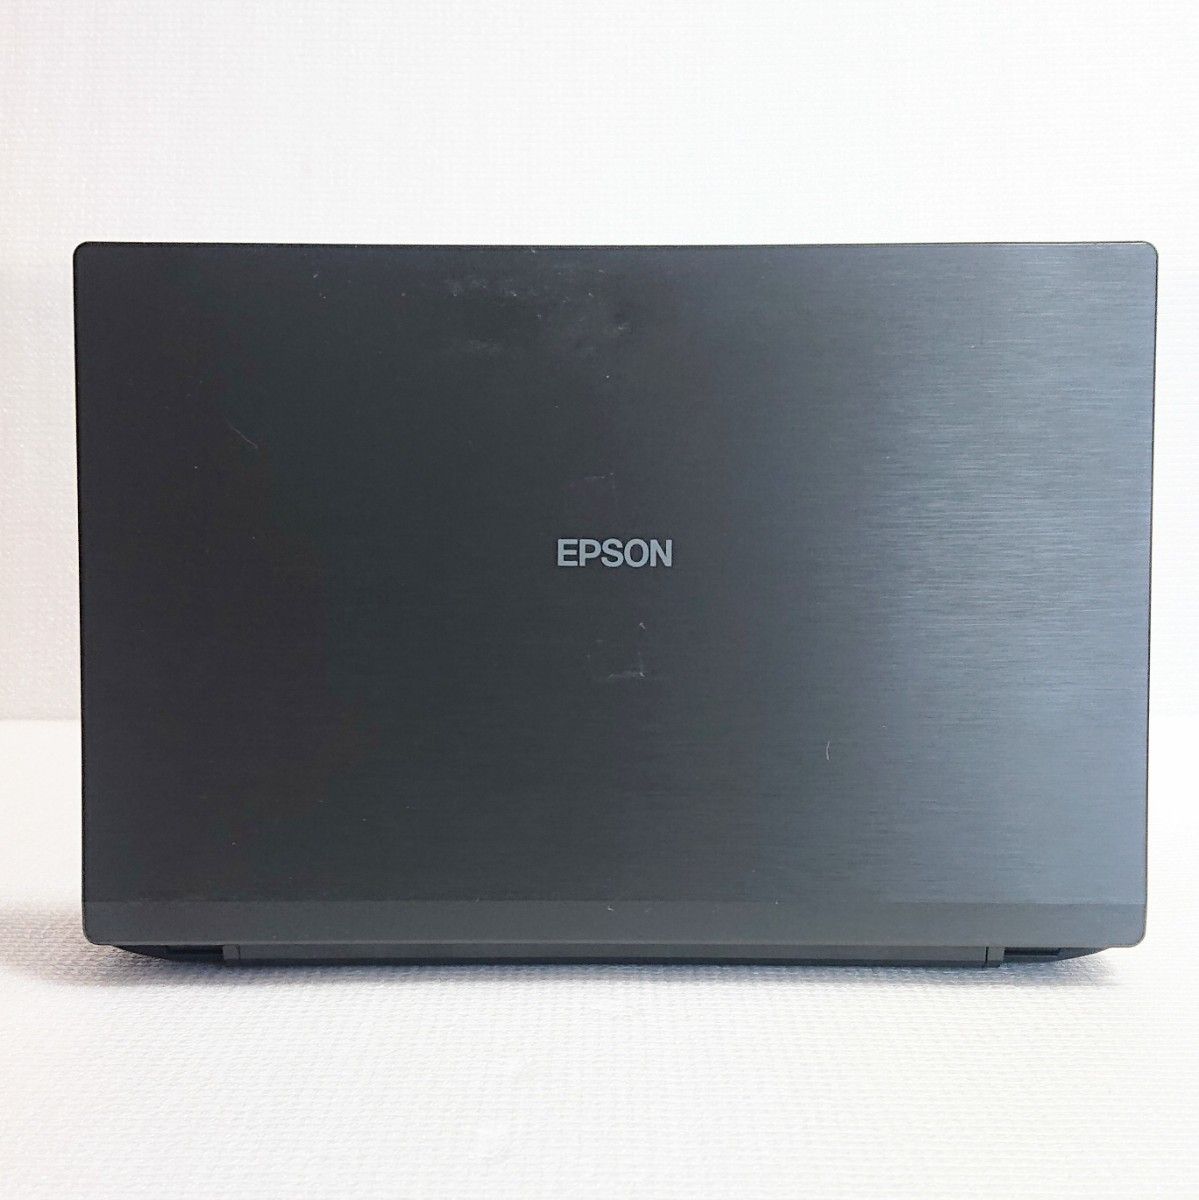 EPSON ゲーミングノートPC / core i7-4710MQ / GeForse GTX 950M / 1TB